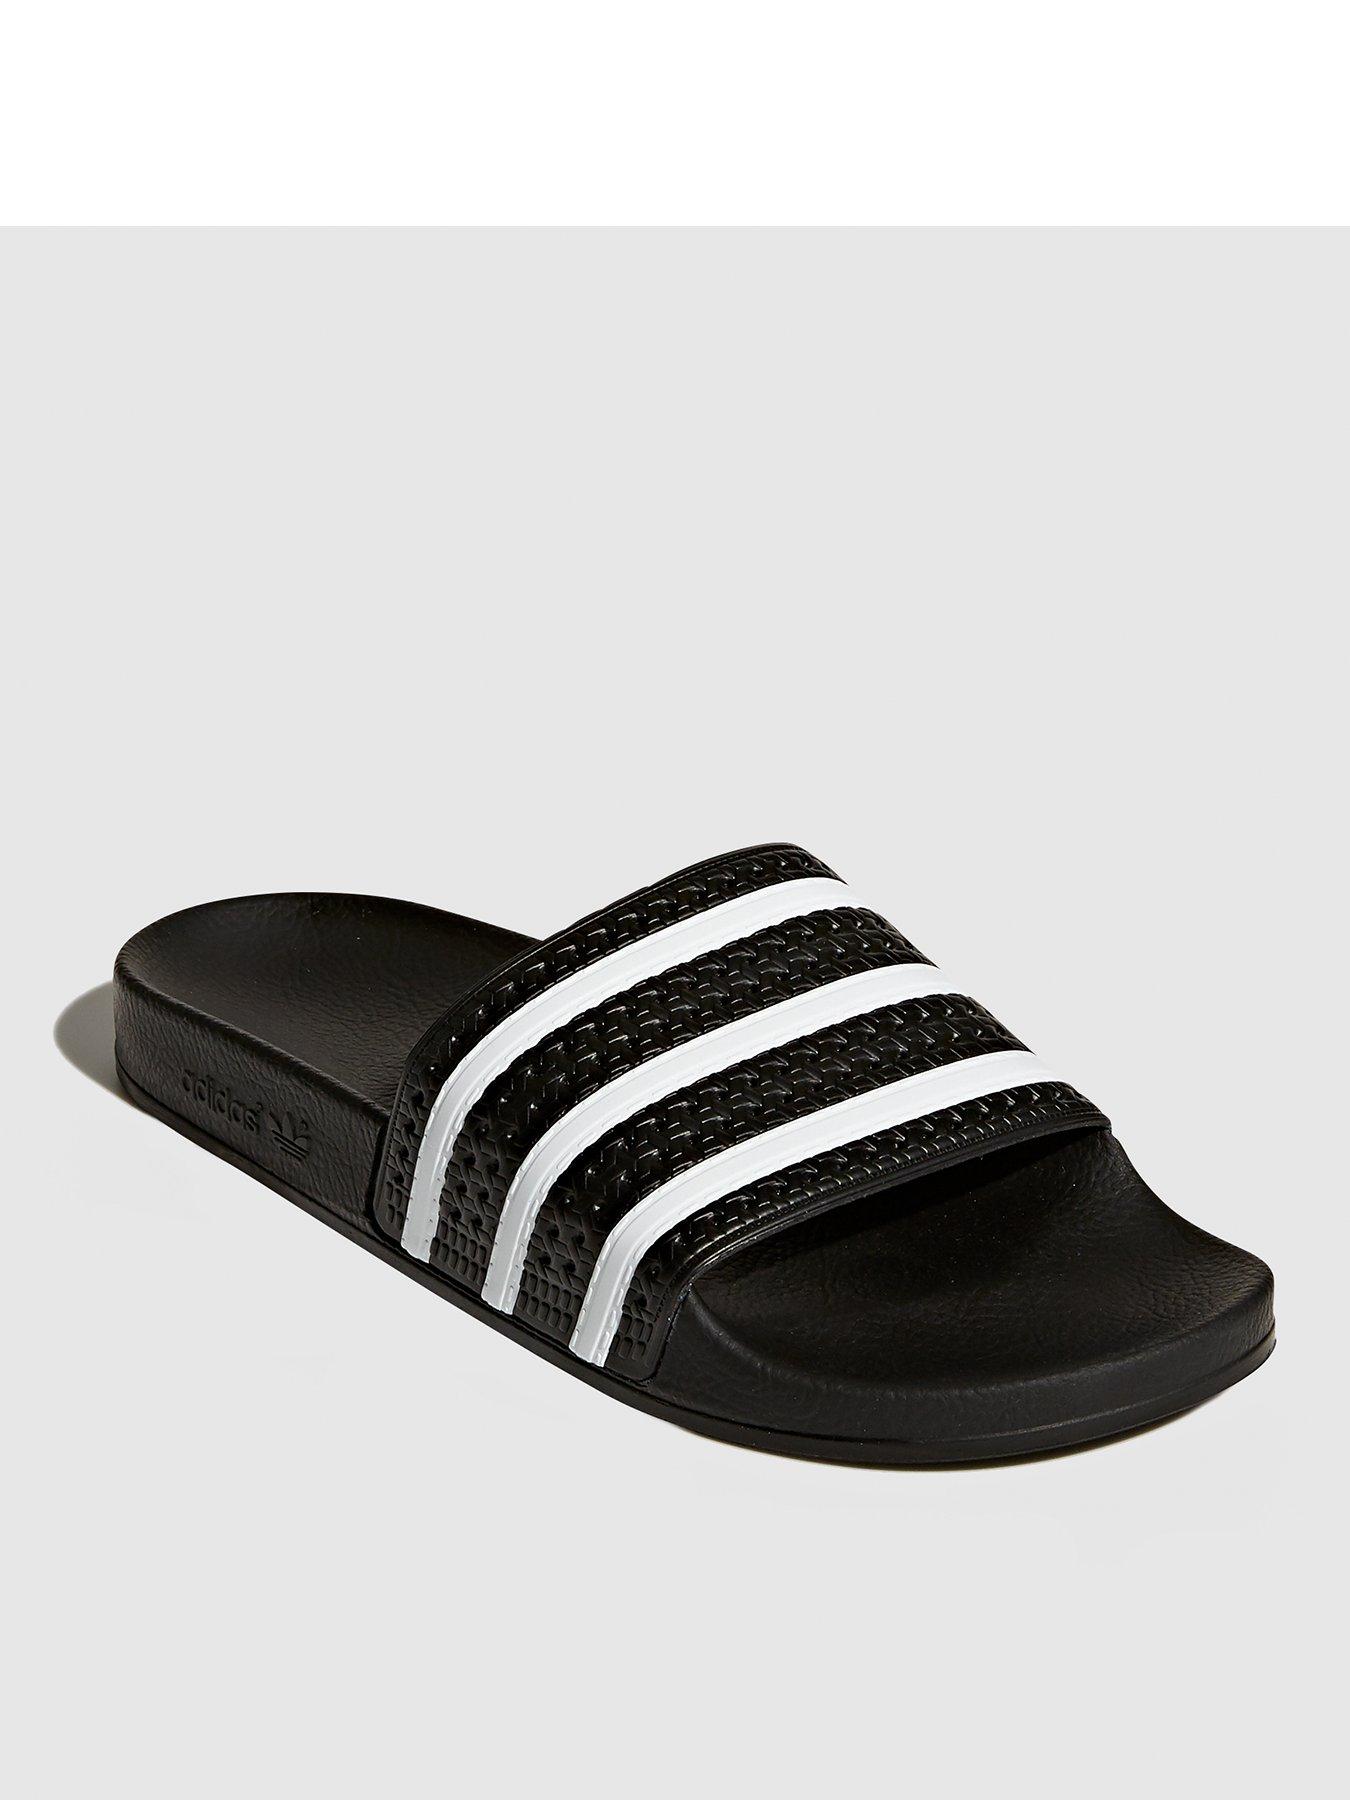 Adidas | Flip flops \u0026 sandals | Shoes 